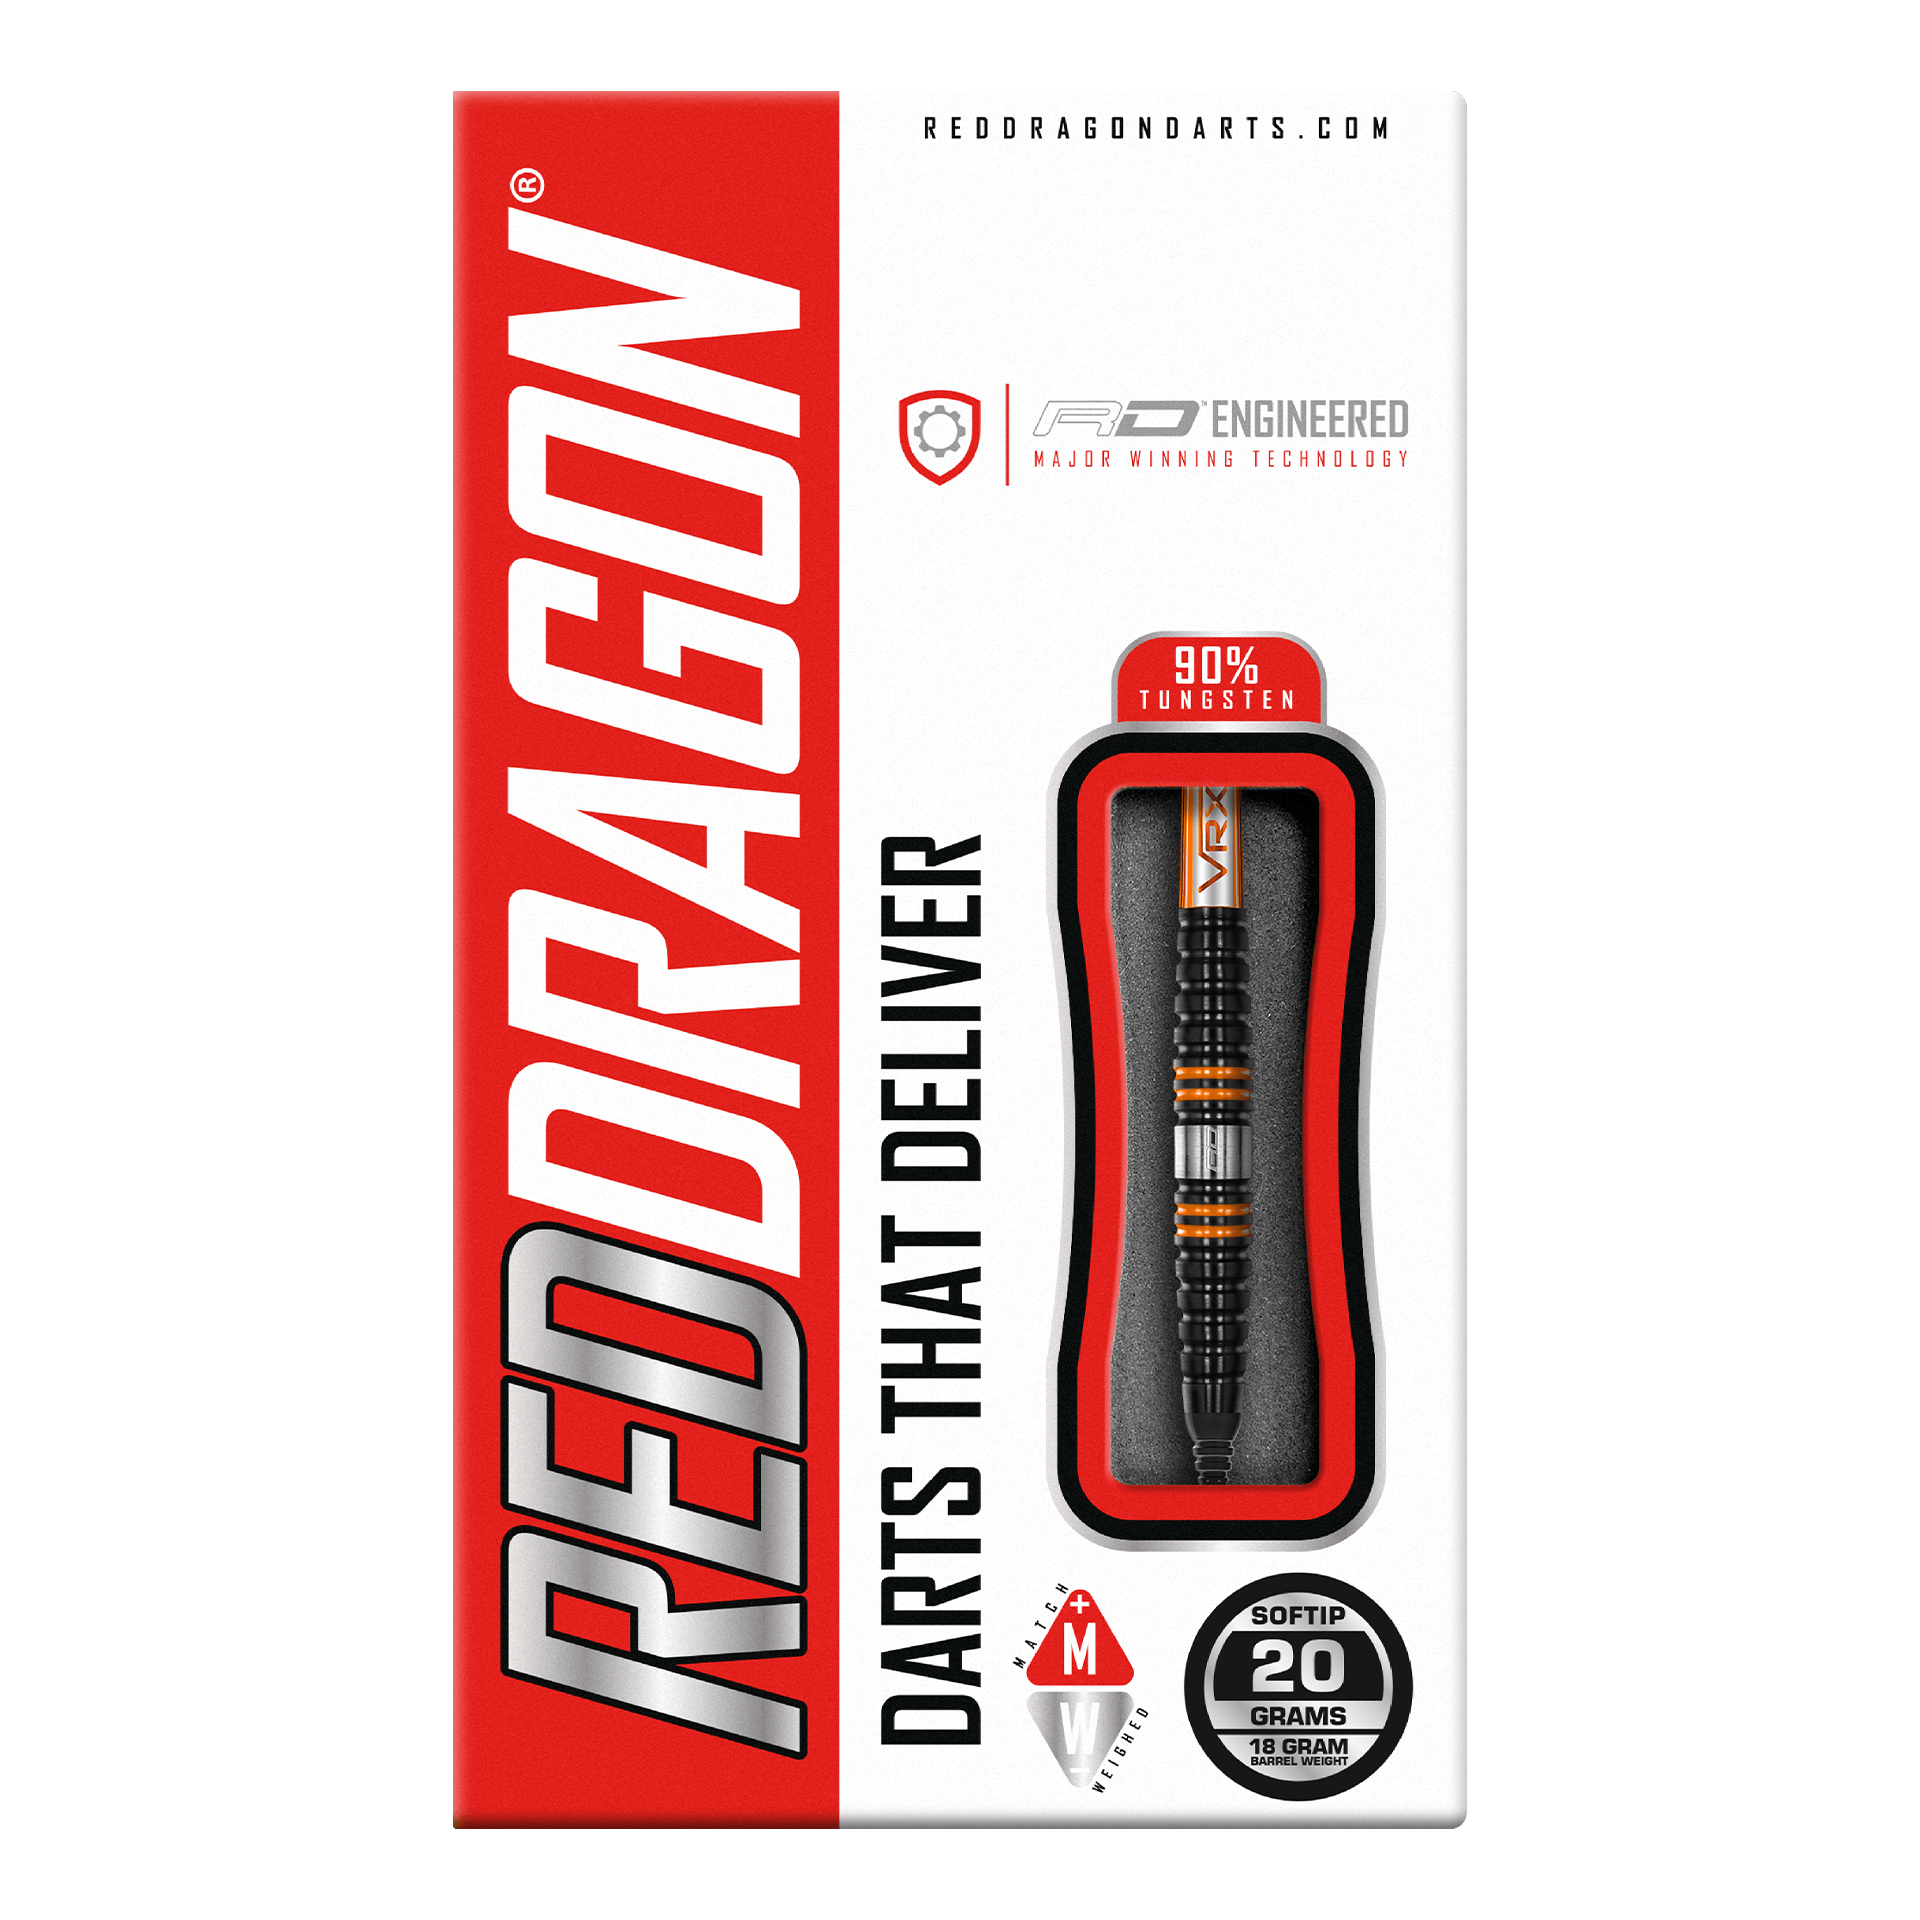 Red Dragon Amberjack Pro 2 Softdarts